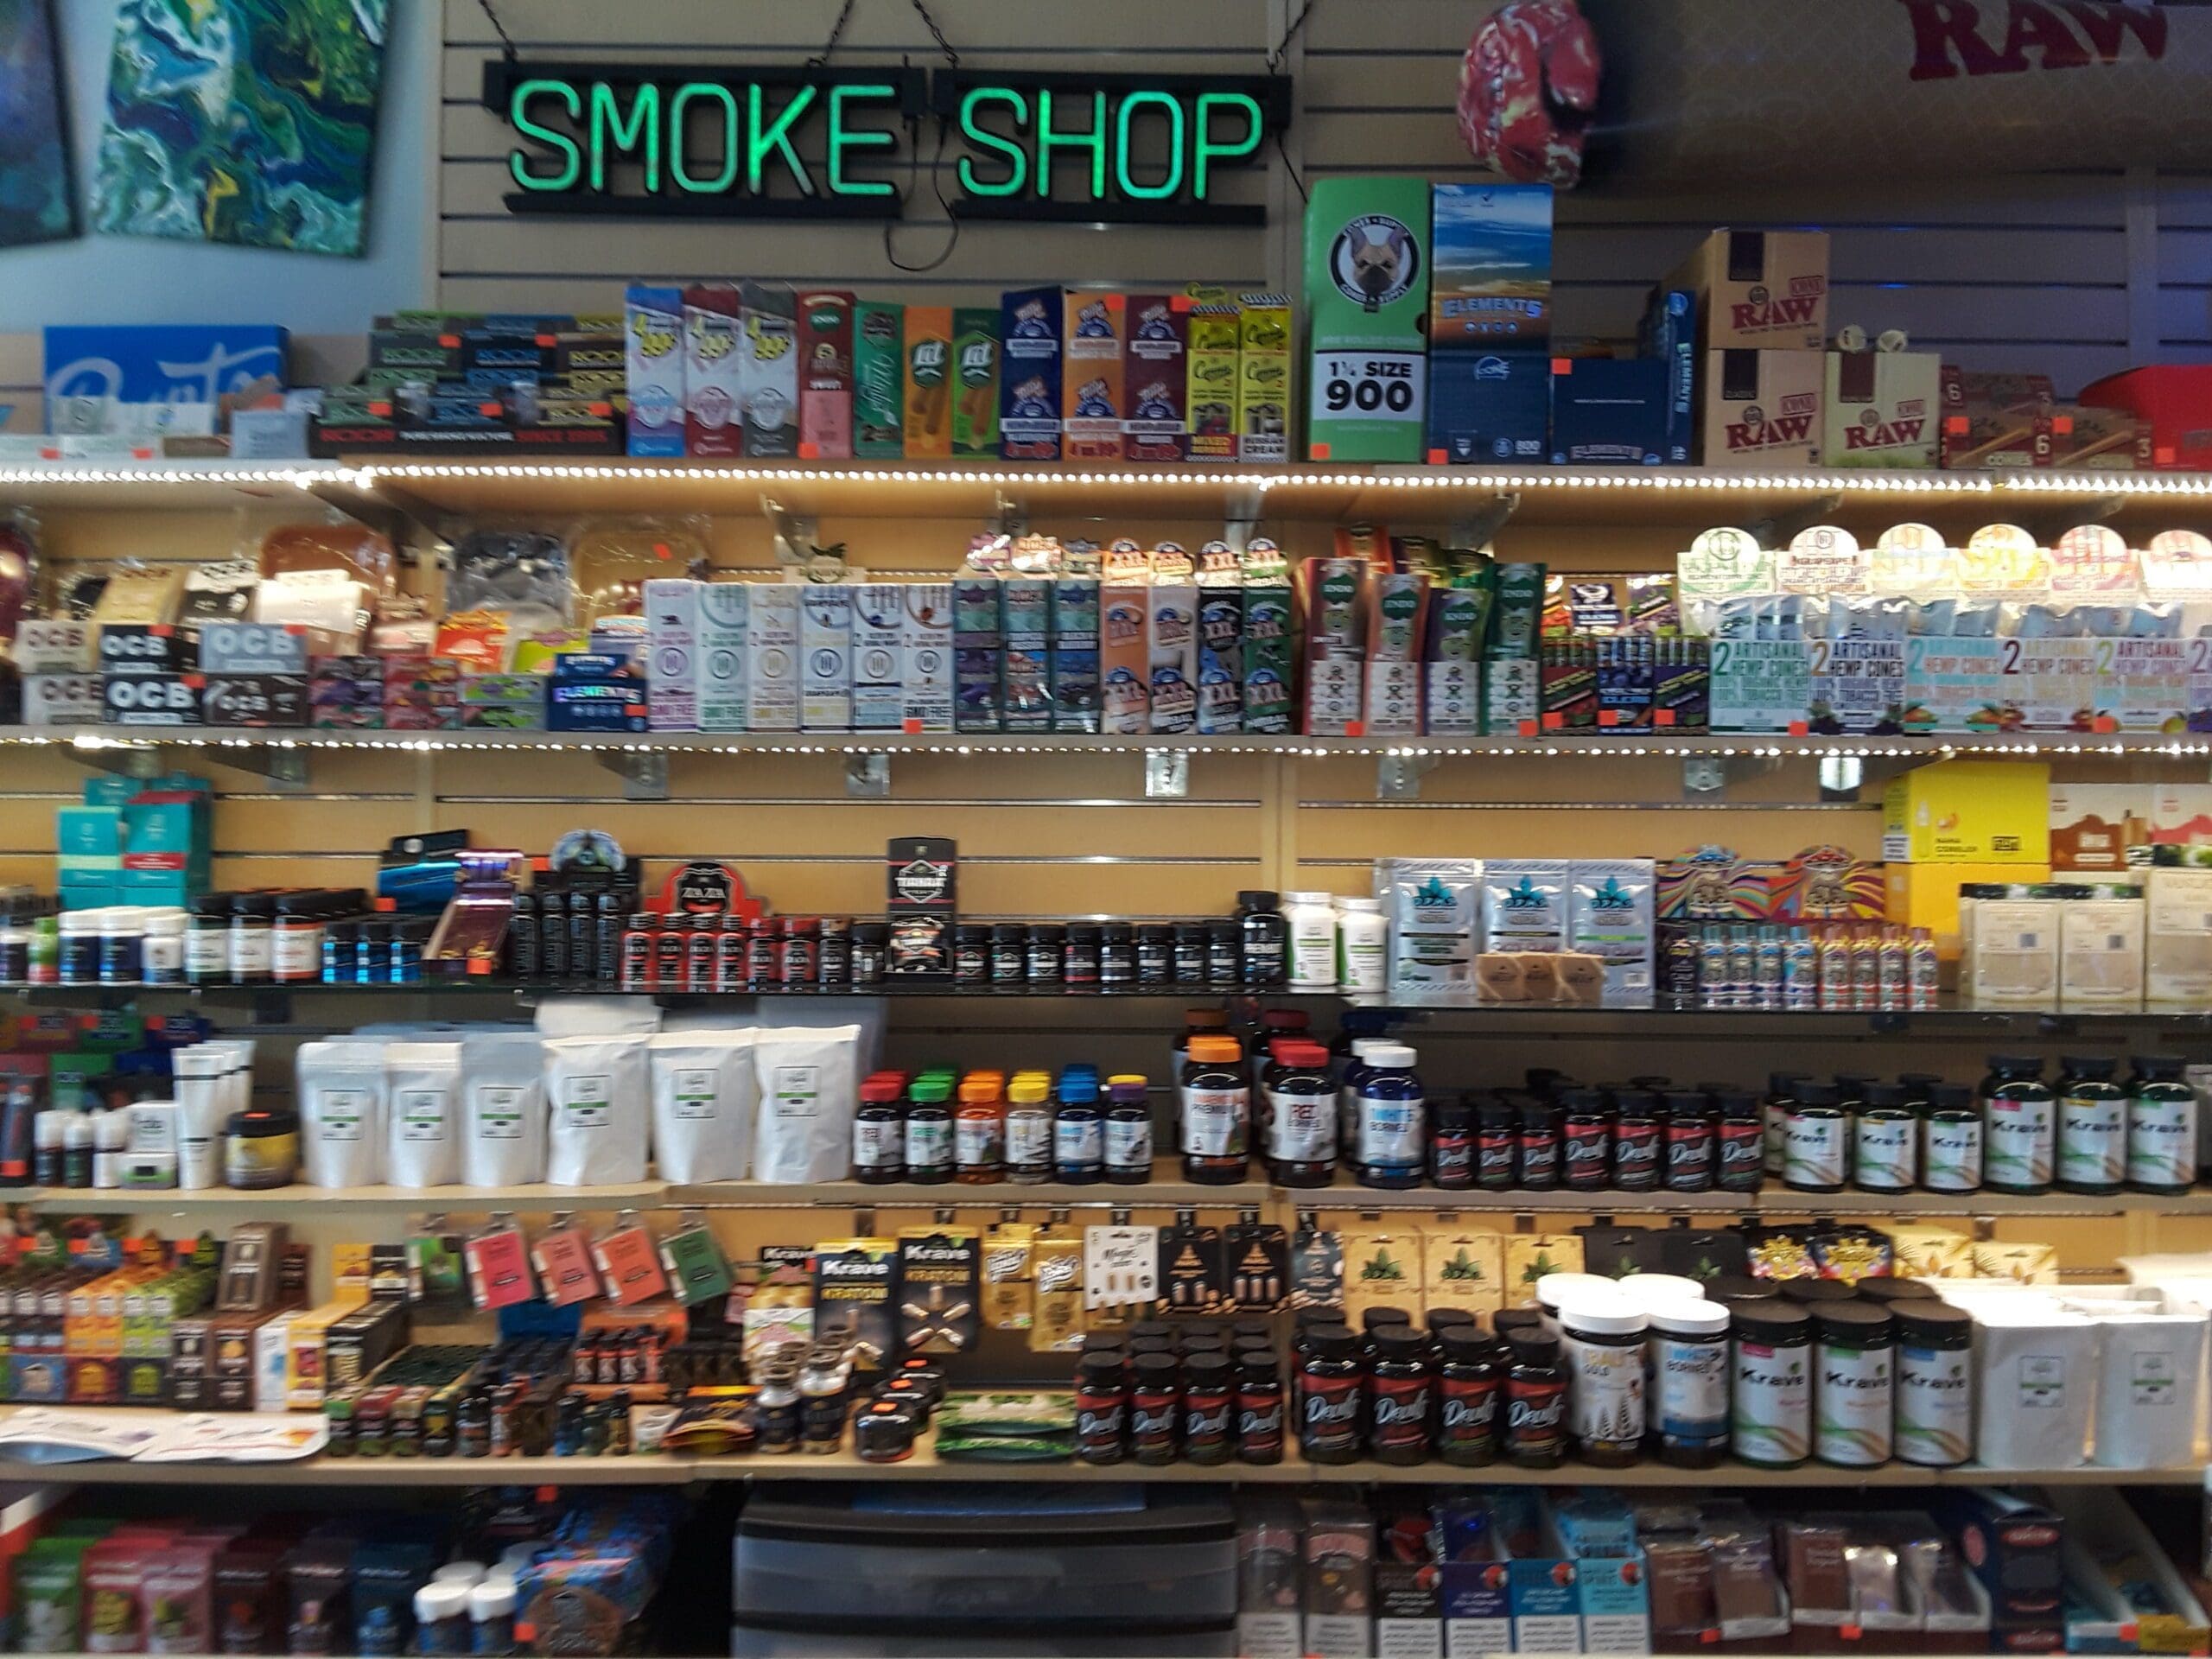 Ark Smoke Shop Kratom Shop Granada Hills 91344 scaled